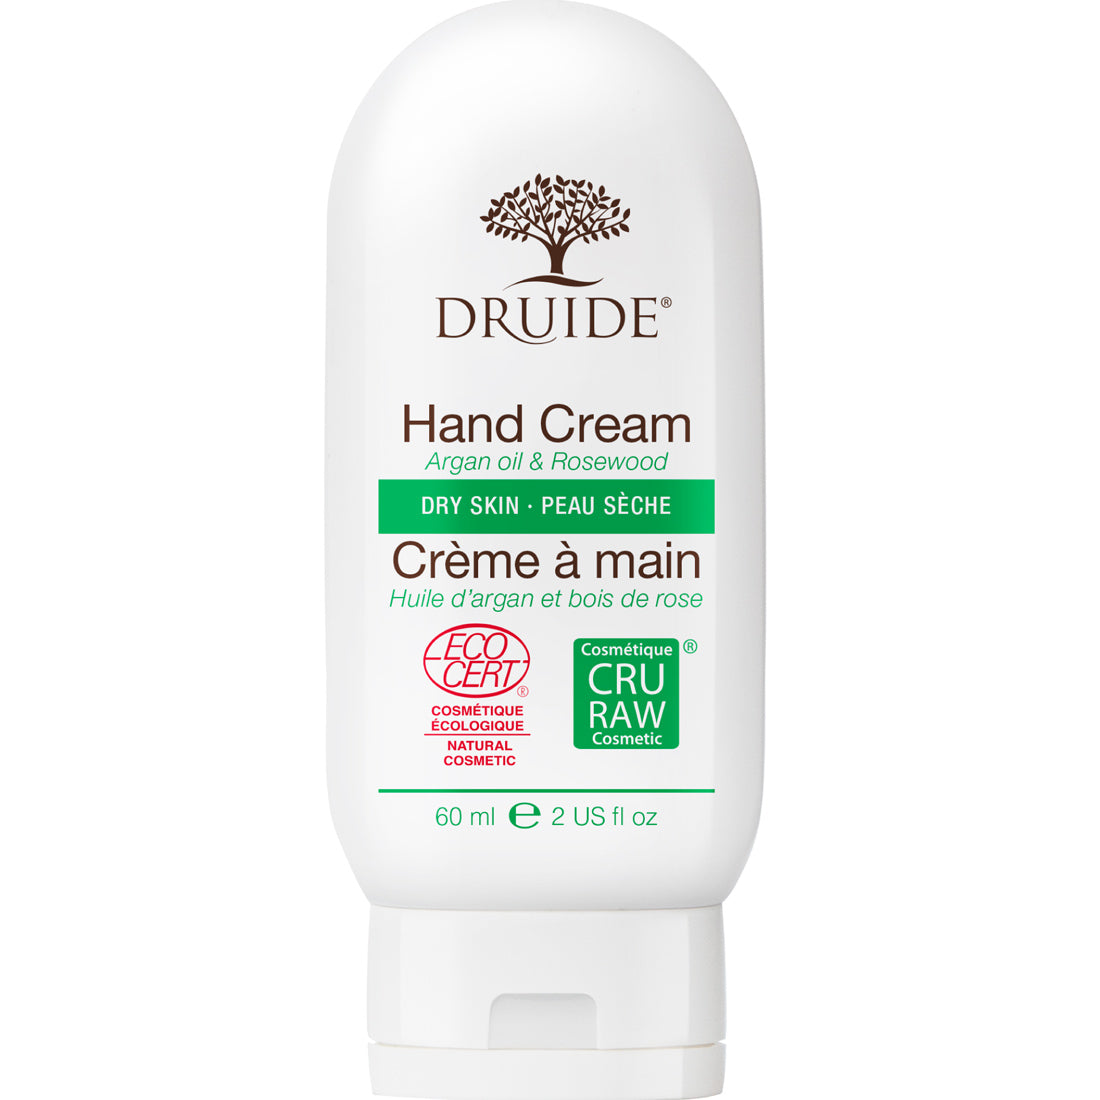 Druide Argan Hand Cream, Dry Skin, 60ml